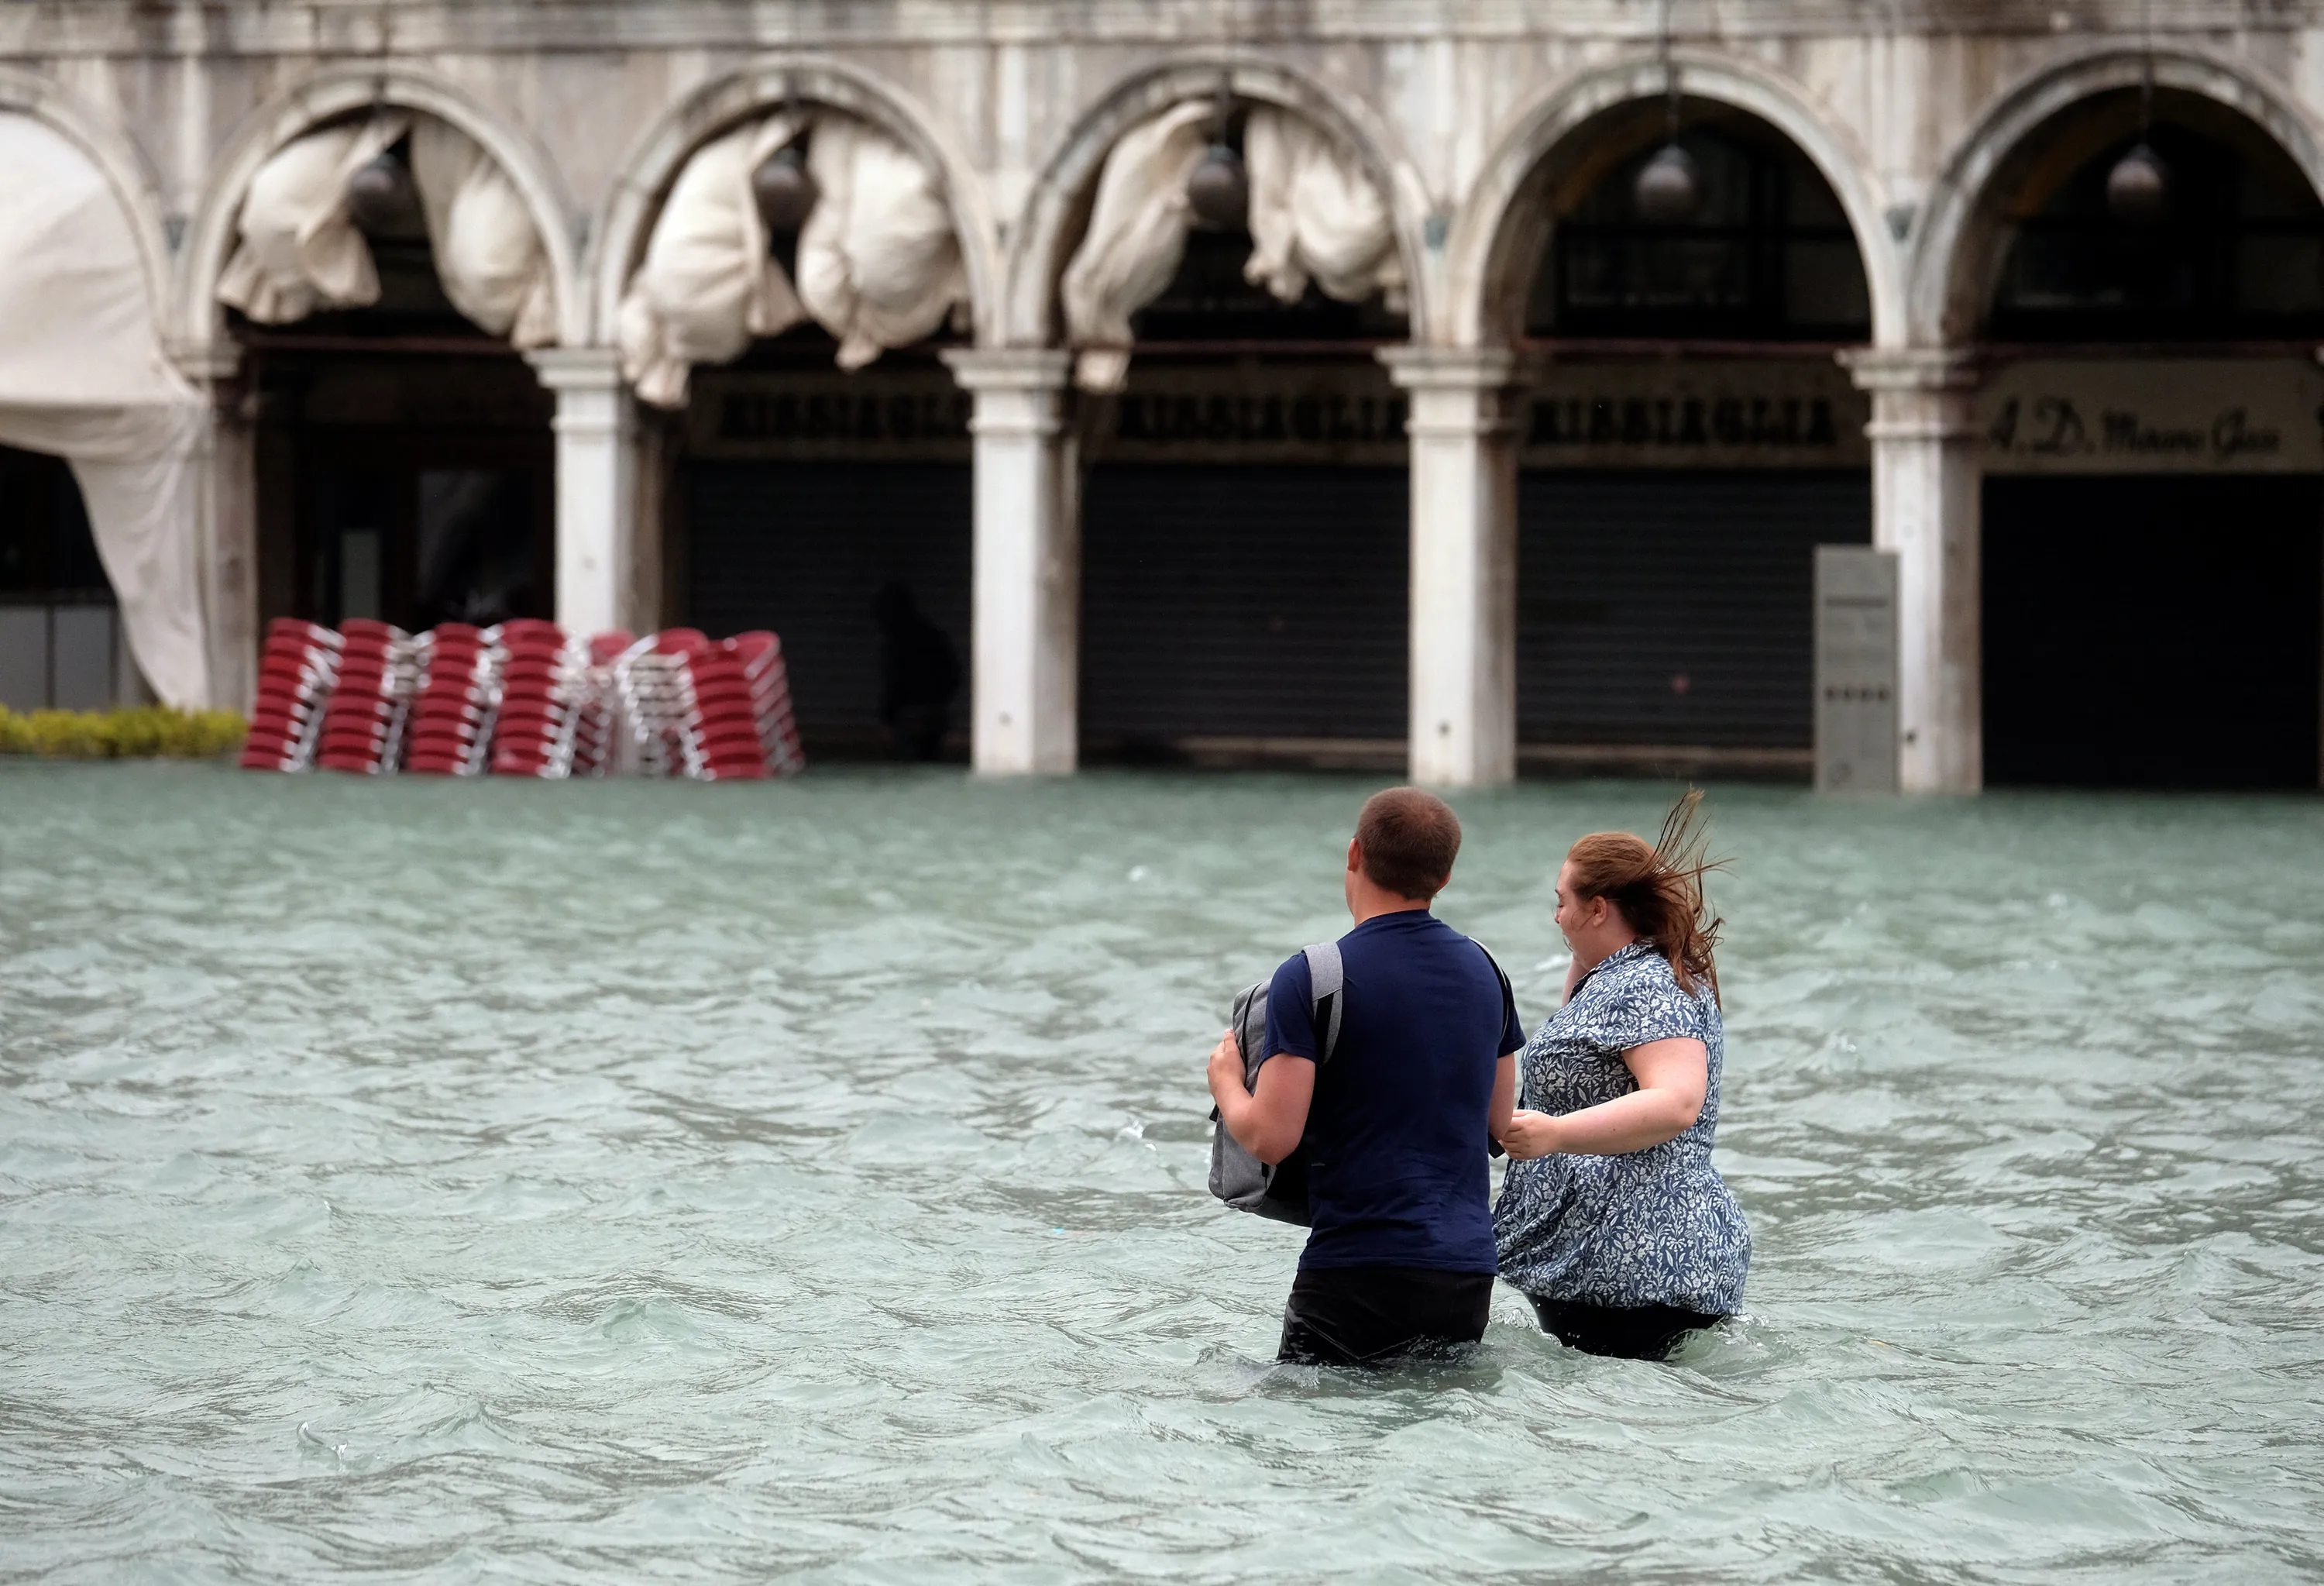 Почему венеция на воде. Площадь Сан Марко в Венеции затопило. Наводнение на площади Сан Марко. Венеция затонет. Венеция Италия наводнение.